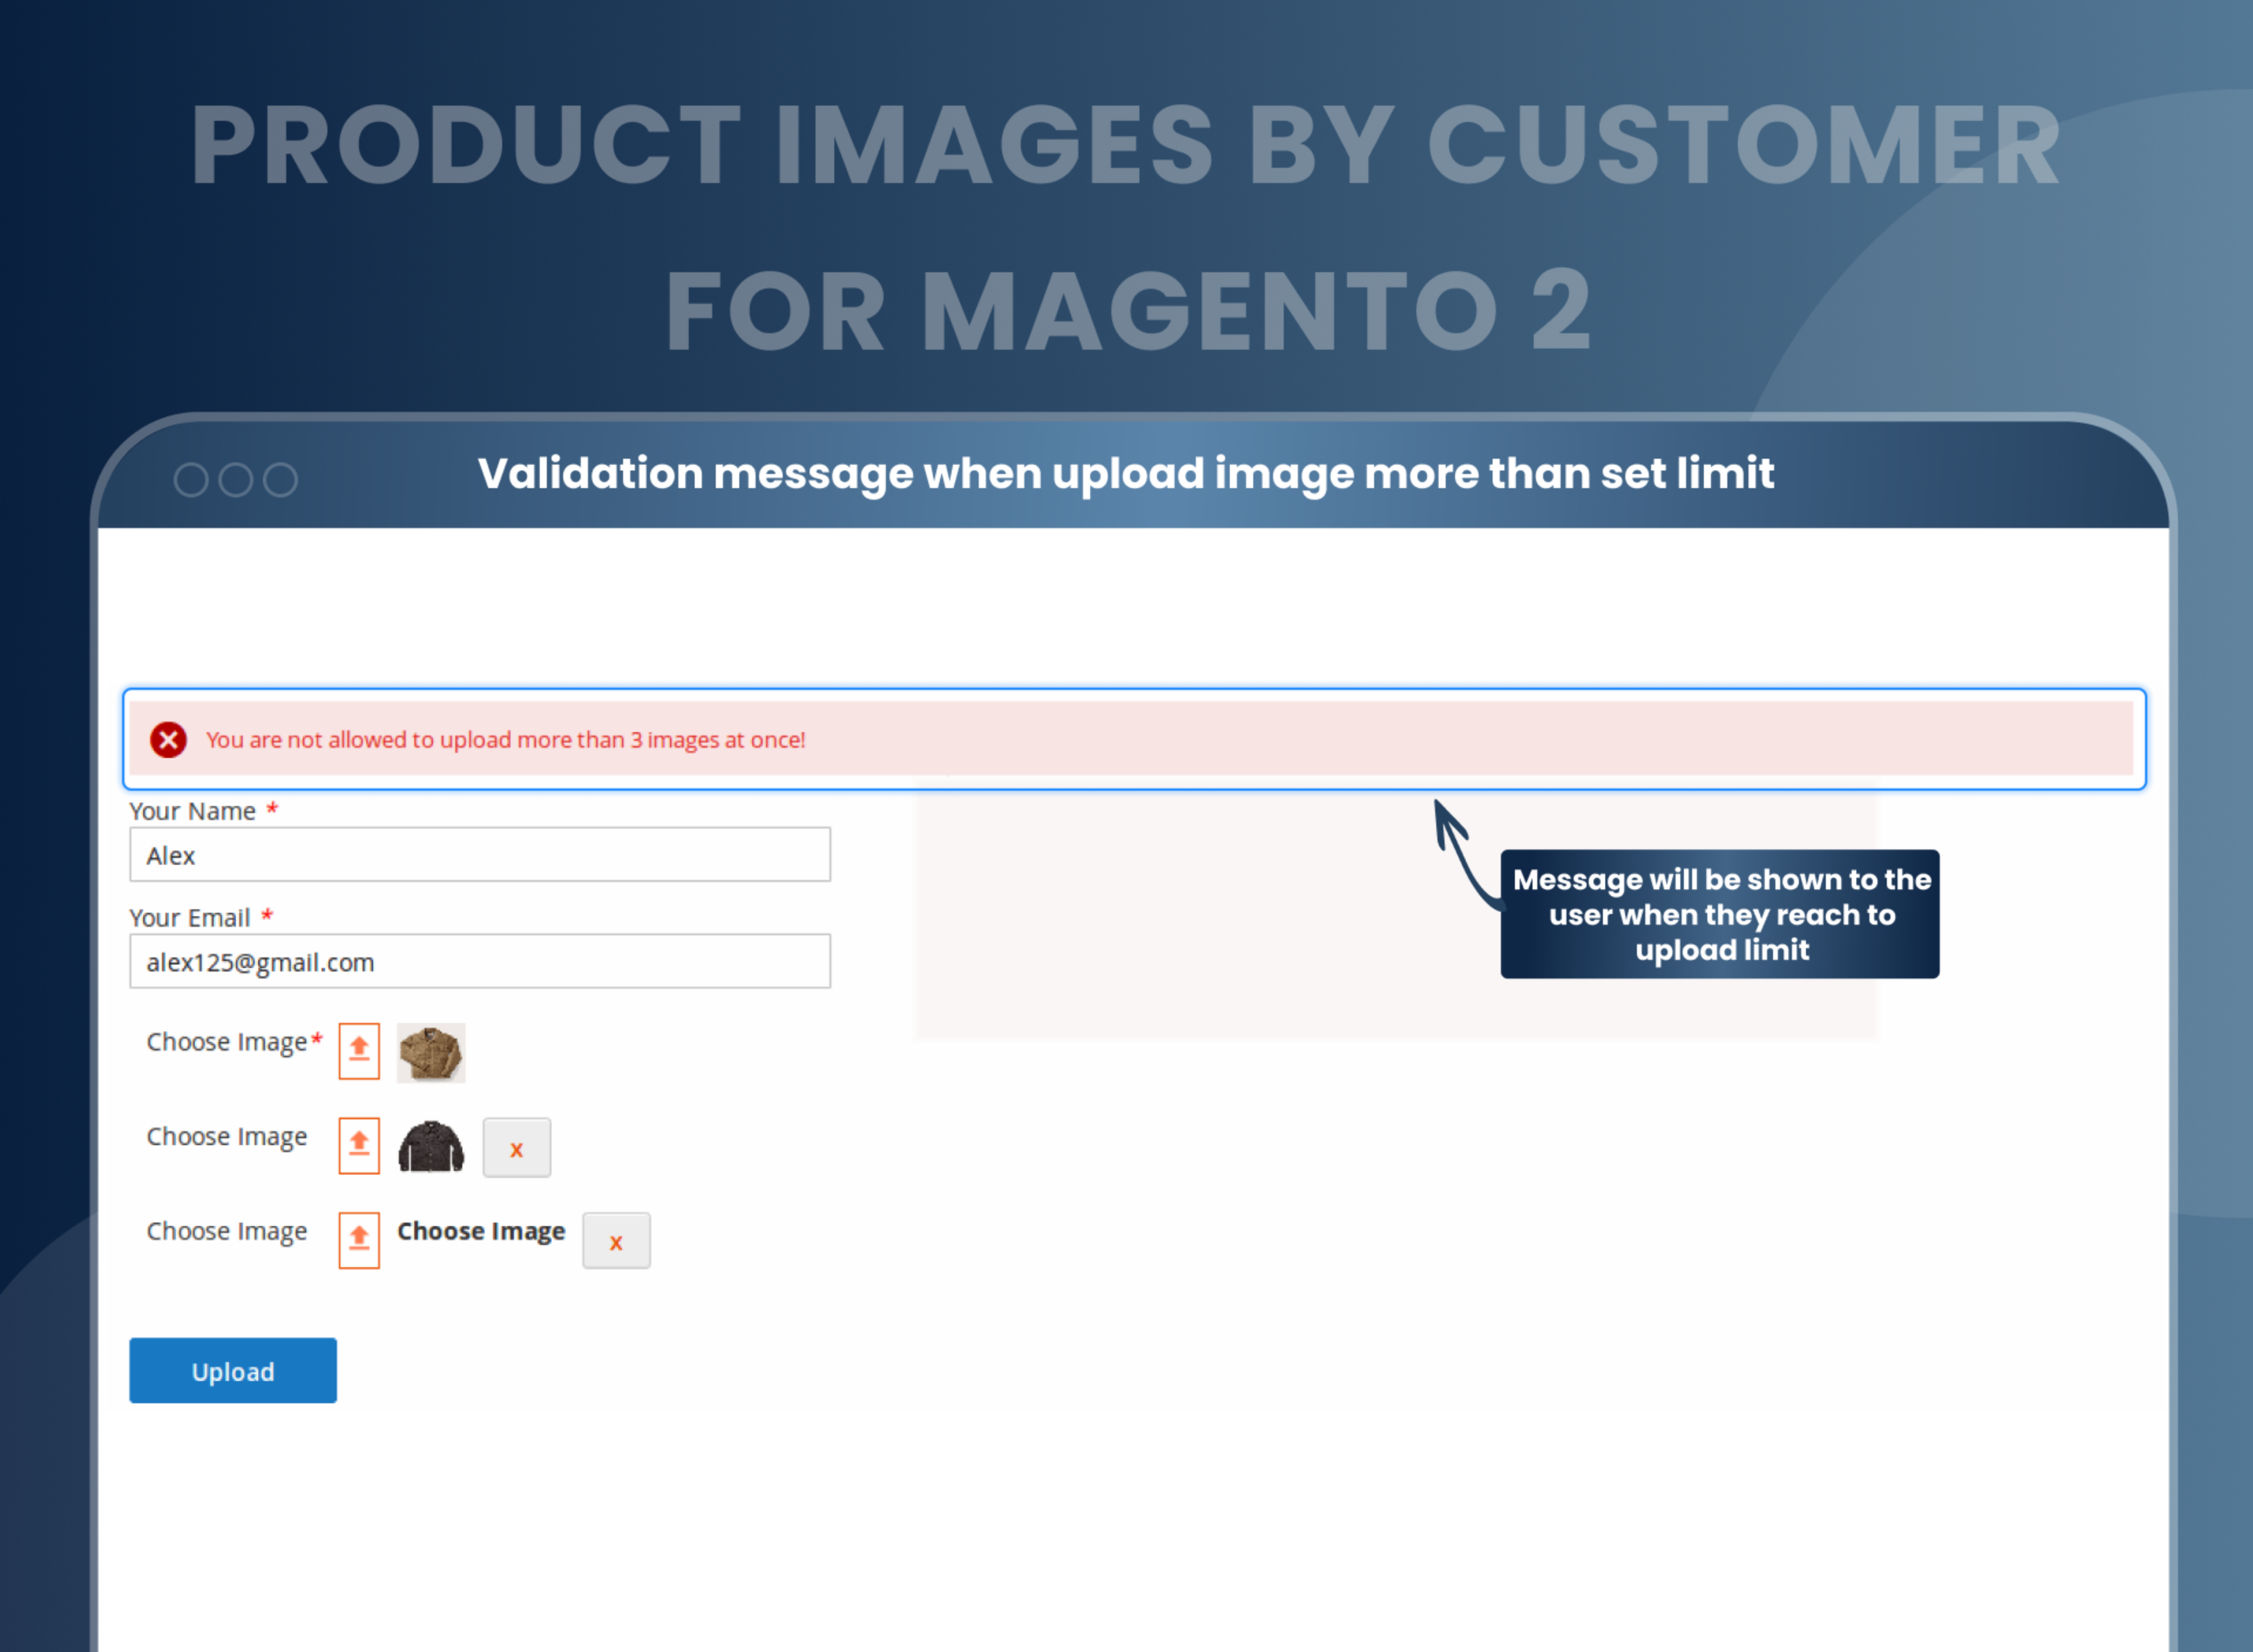 Validation message when upload image more than set limit